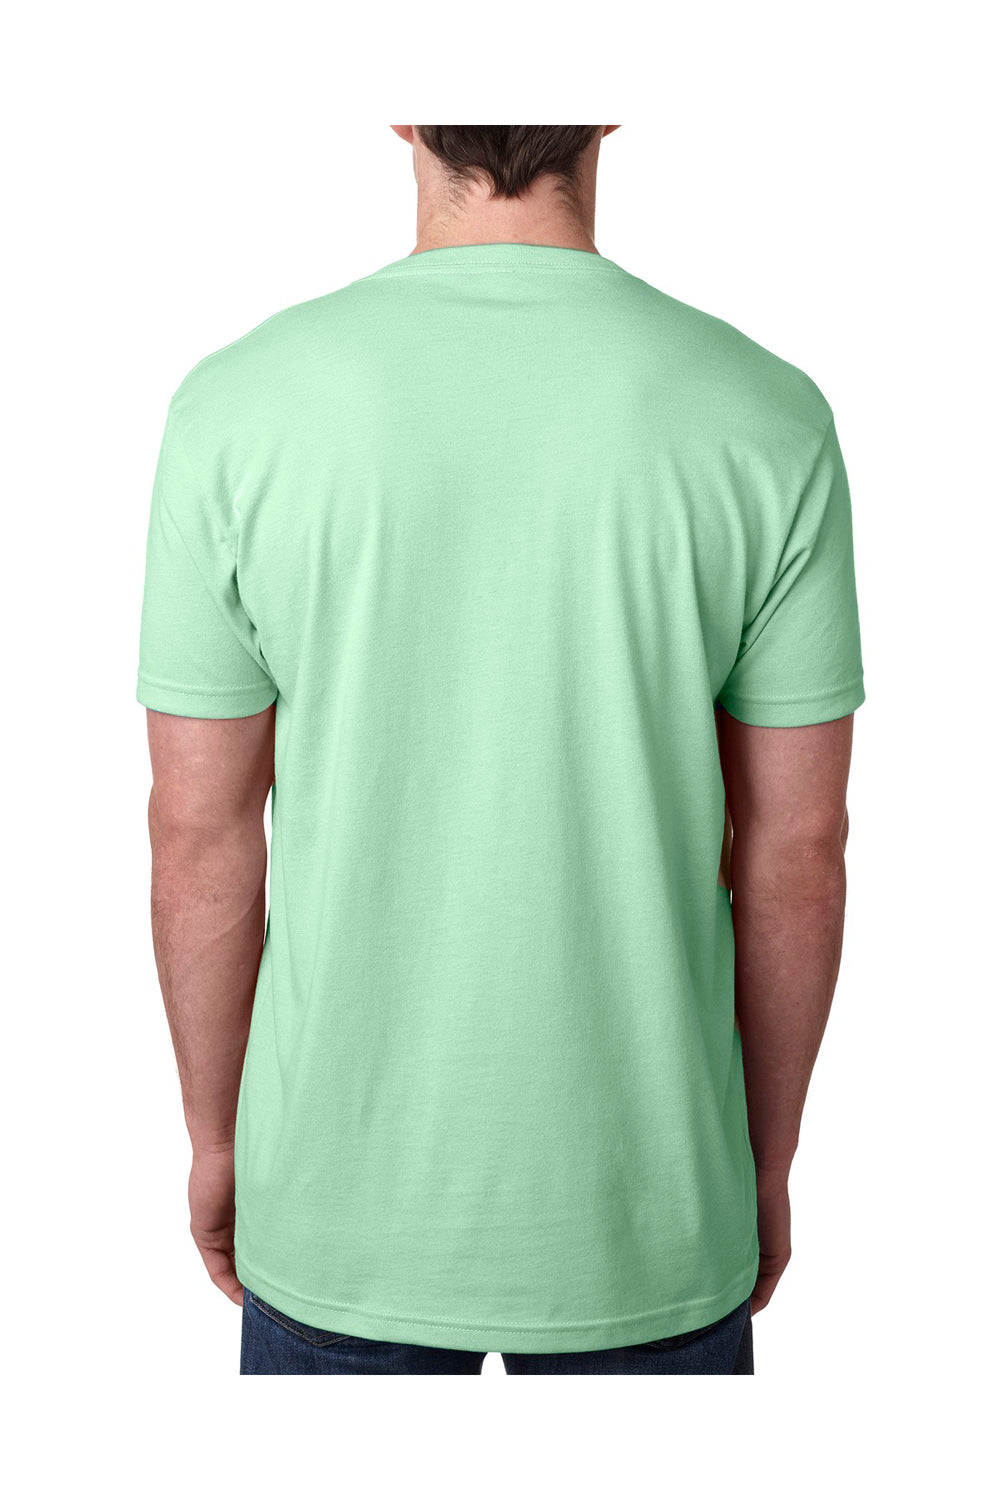 Next Level 6240 Mens CVC Jersey Short Sleeve V-Neck T-Shirt Mint Green Back